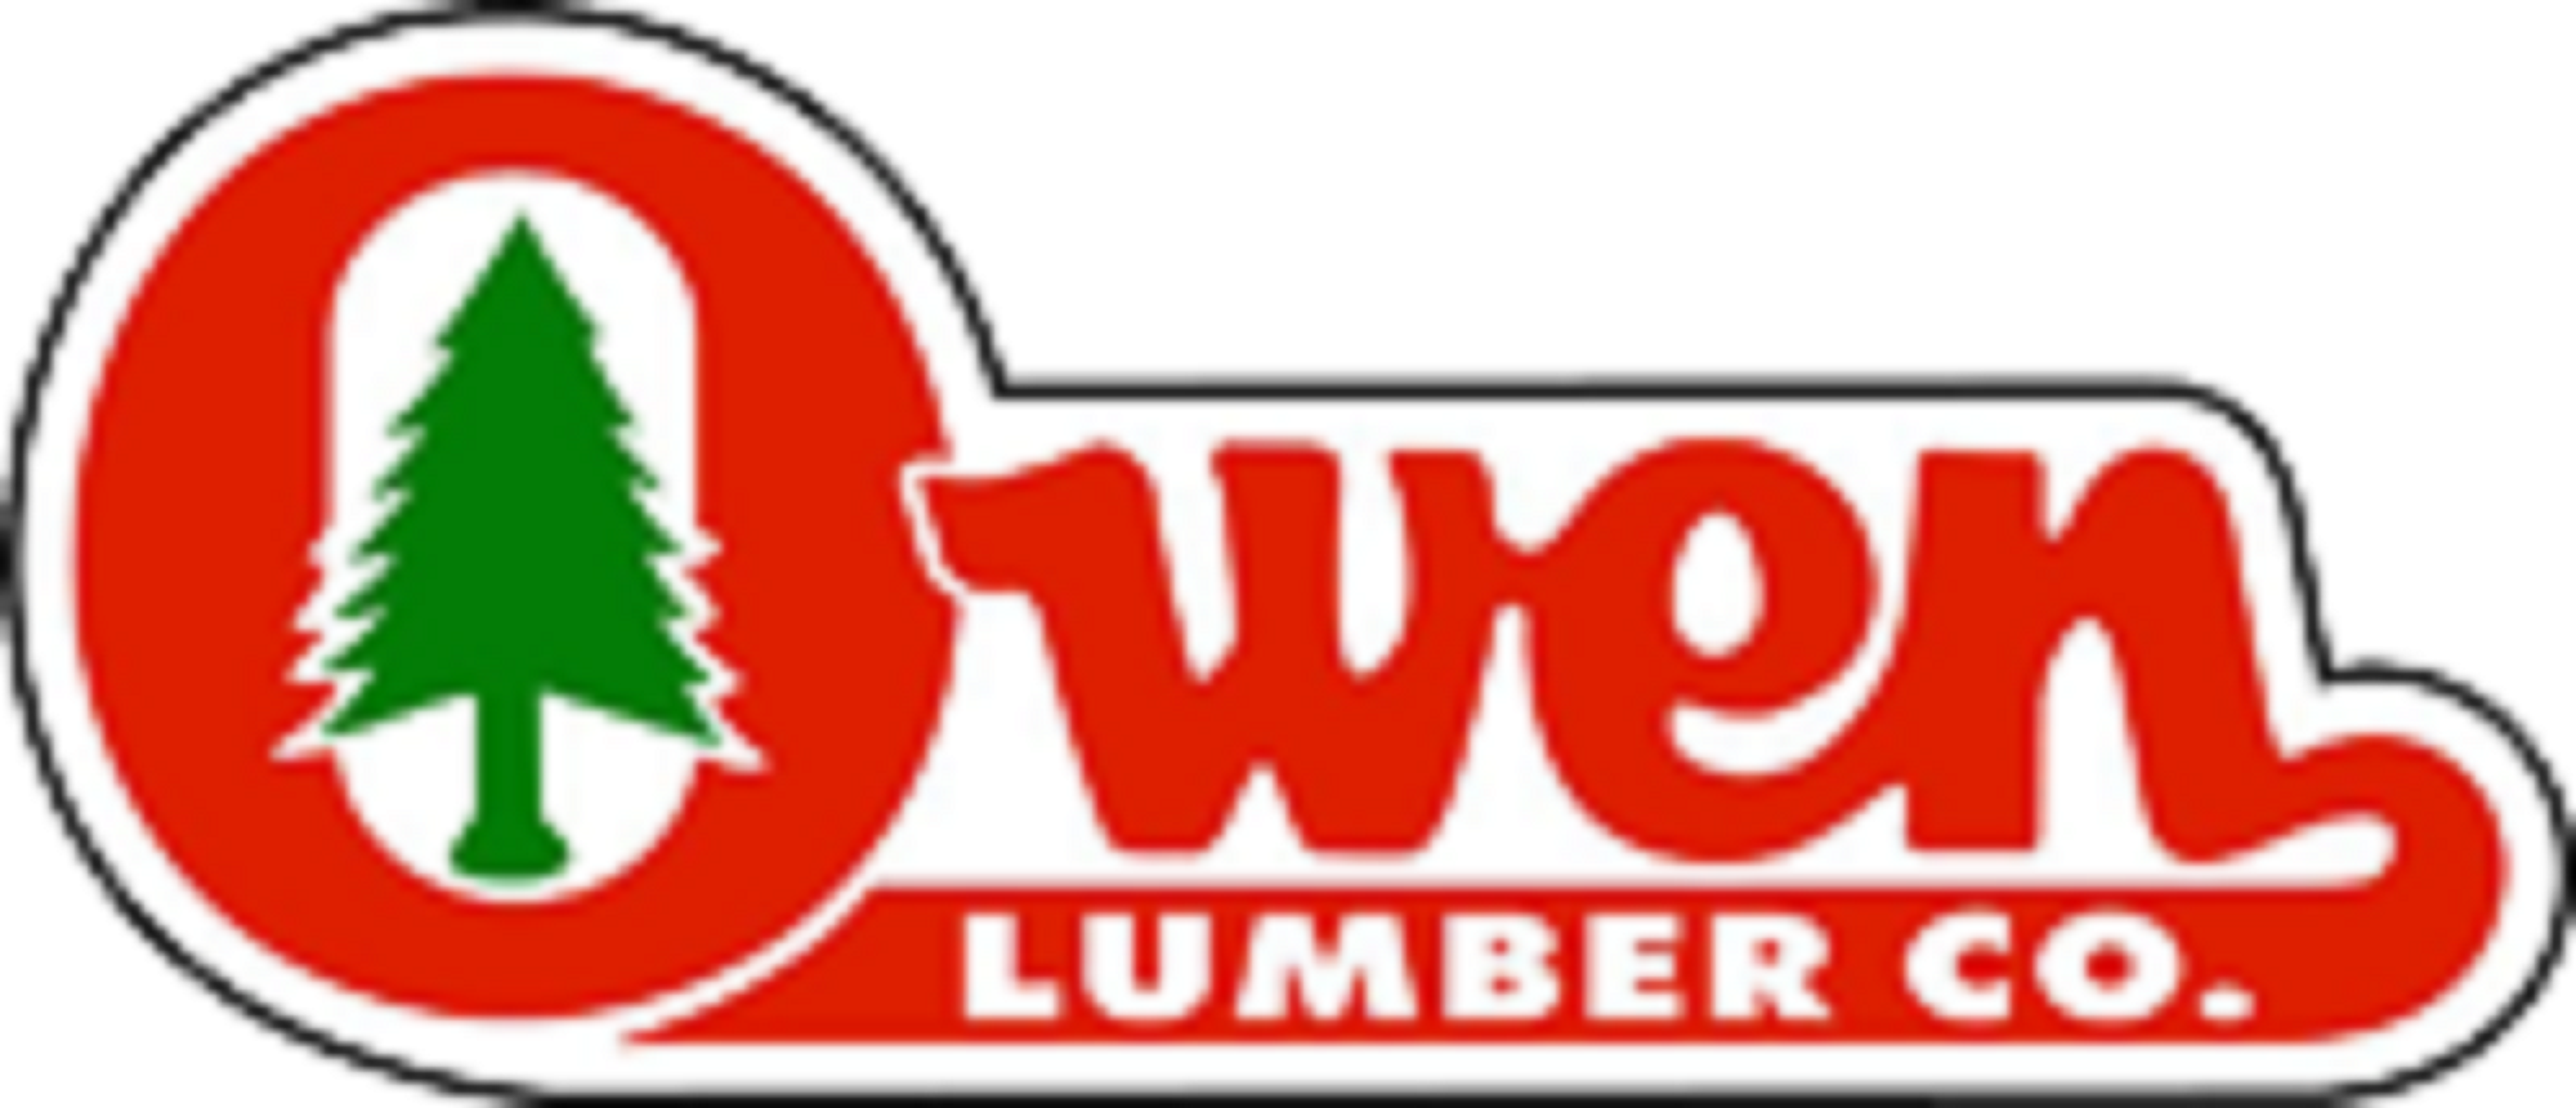 Owen Lumber Co. - Belton, MO 64012 - (816)331-2211 | ShowMeLocal.com